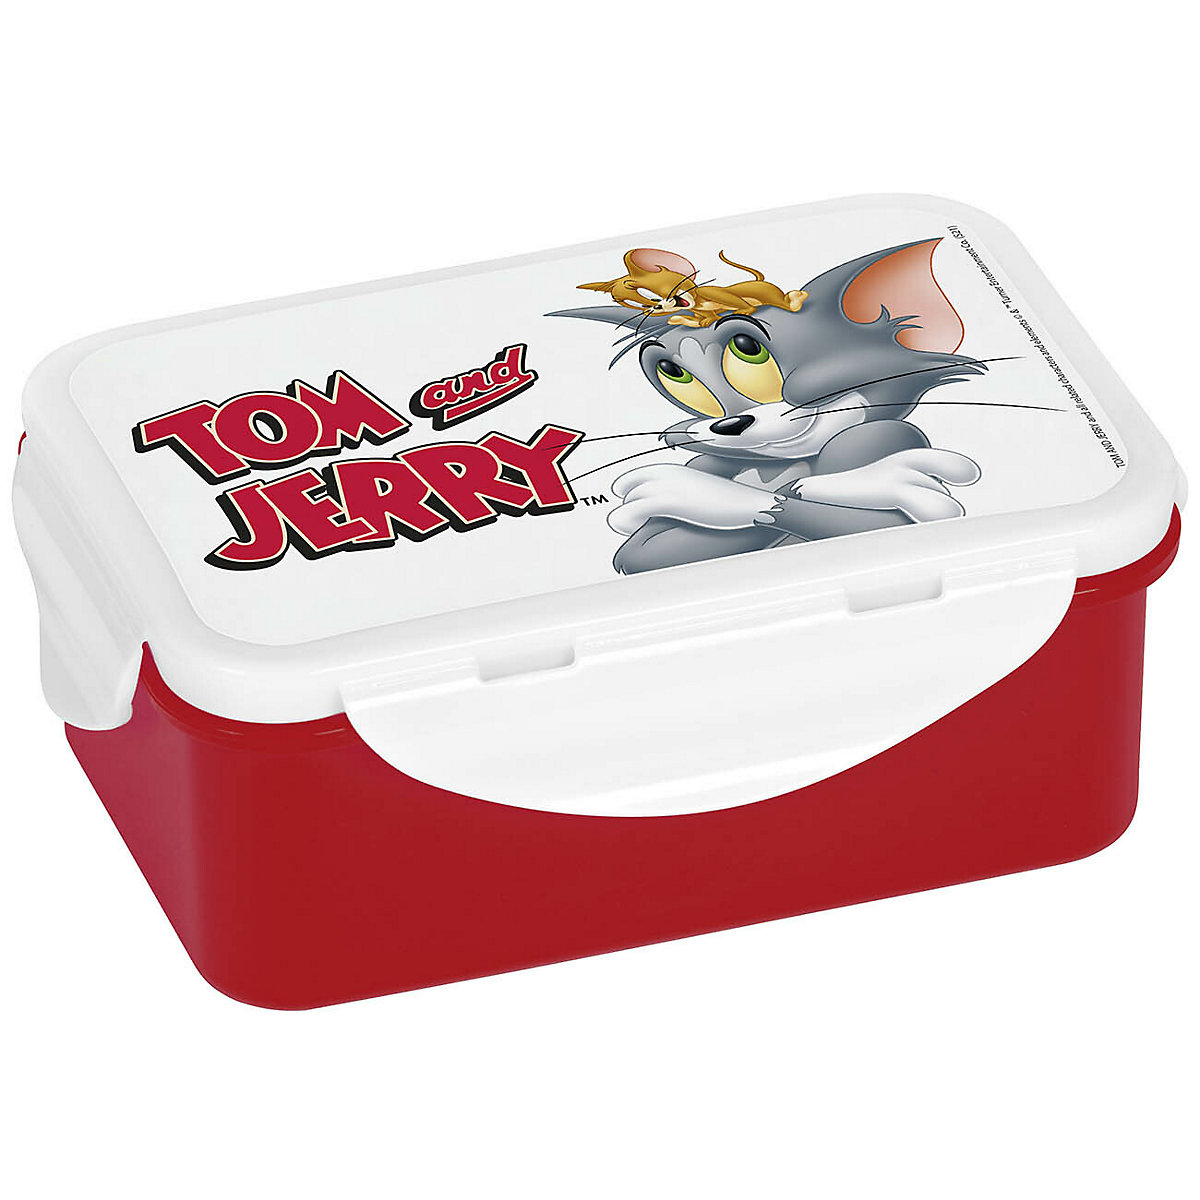 Geda Labels Brotdose Tom & Jerry Brotdosen